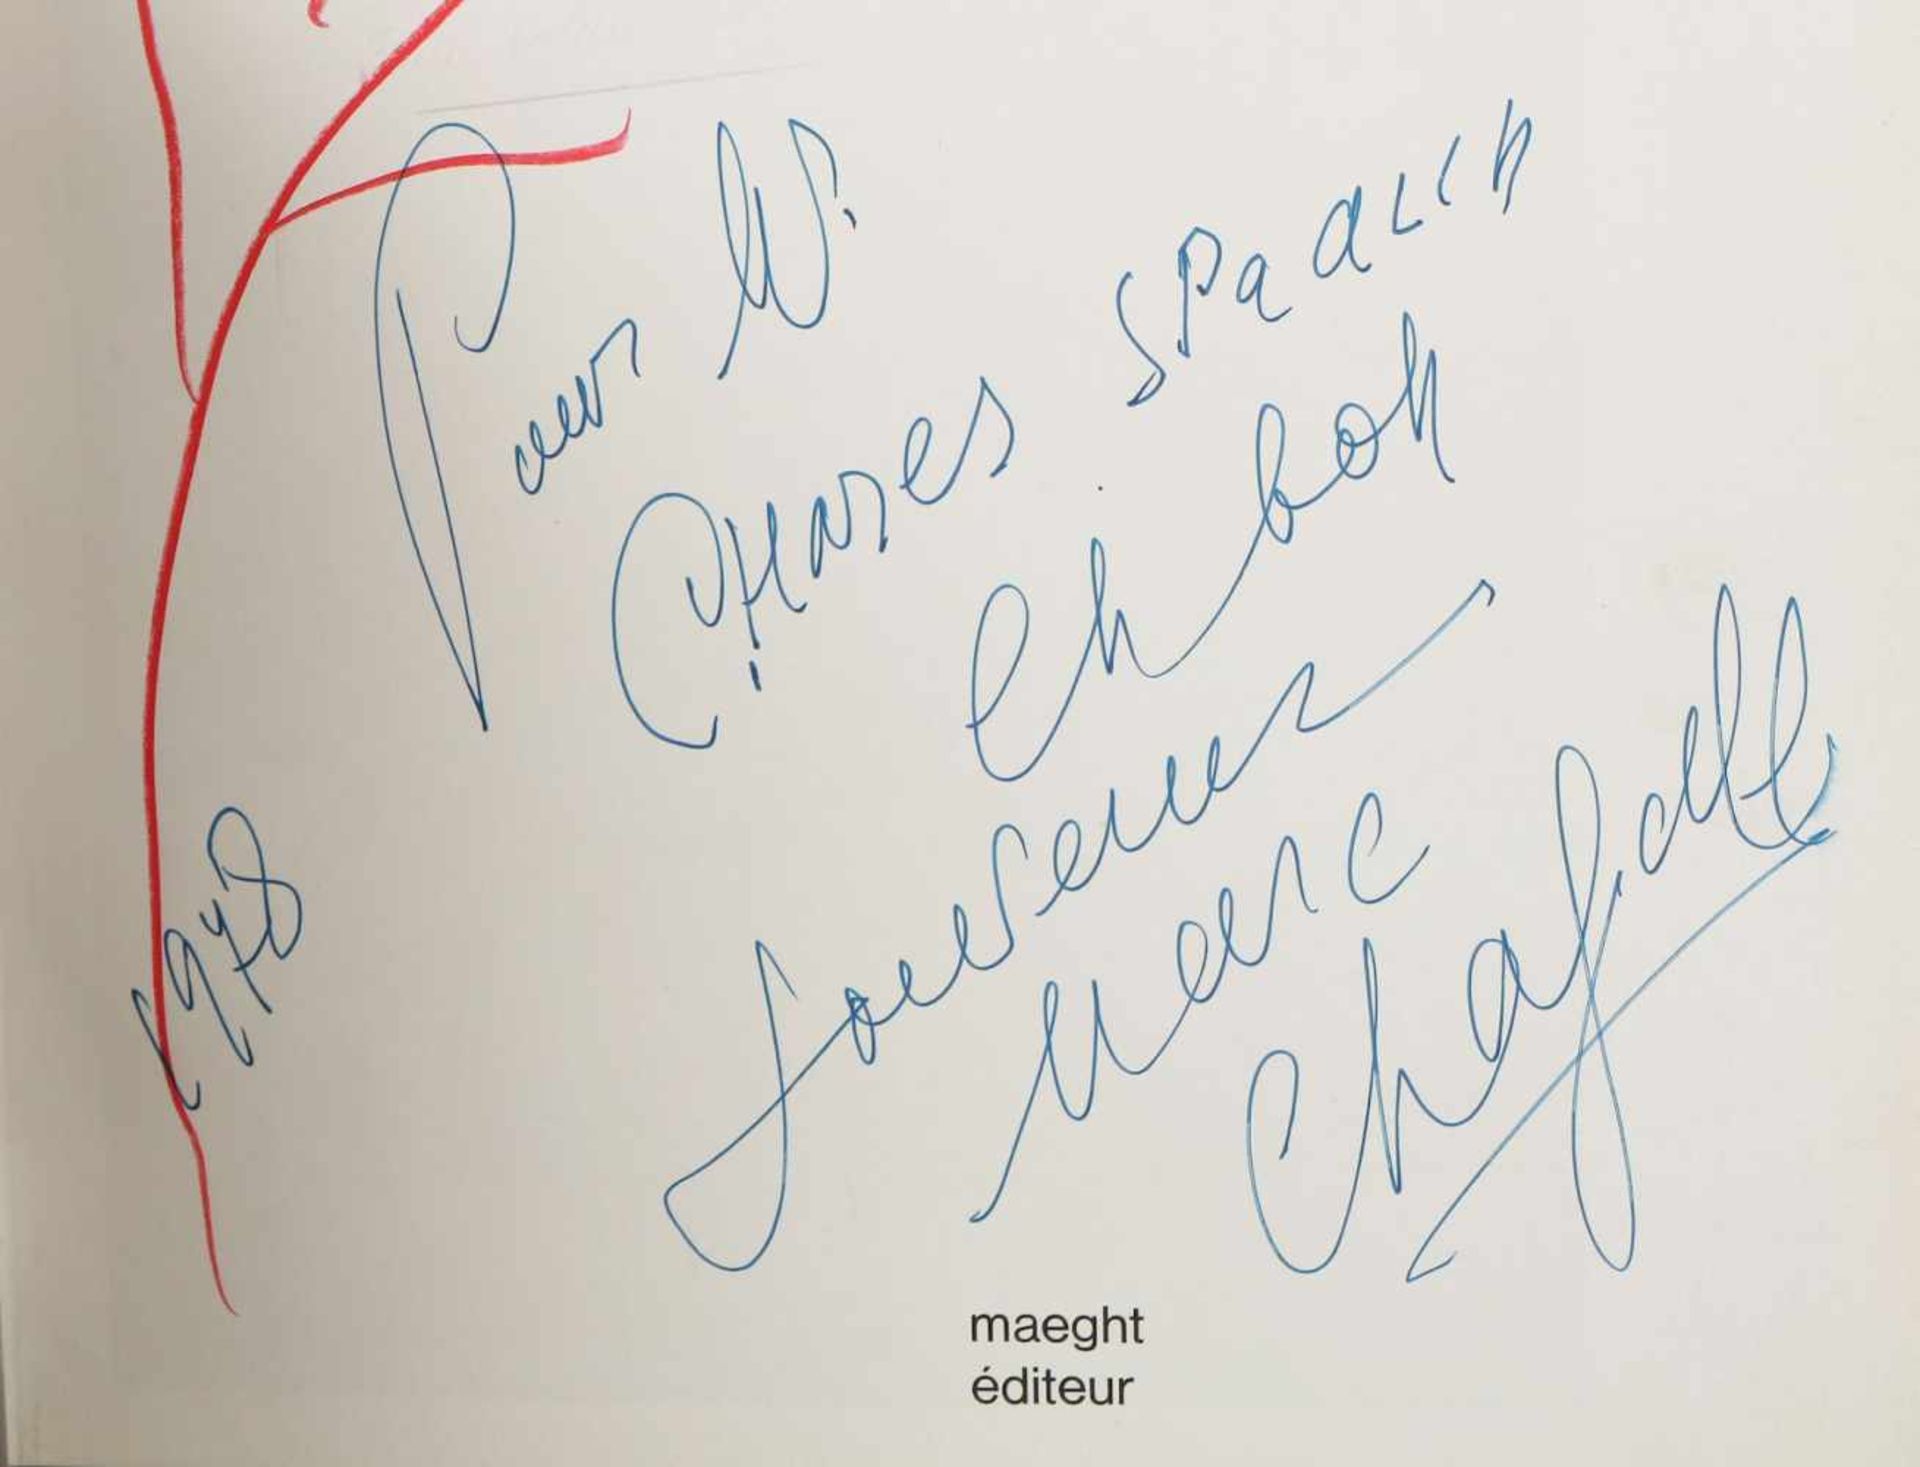 ANDRÉ PIEYRE DE MANDIARGUES Buch ¨Chagall¨ (handsigniert)1974 Maeght Éditeur, Paris, 216 Seiten - Bild 3 aus 3